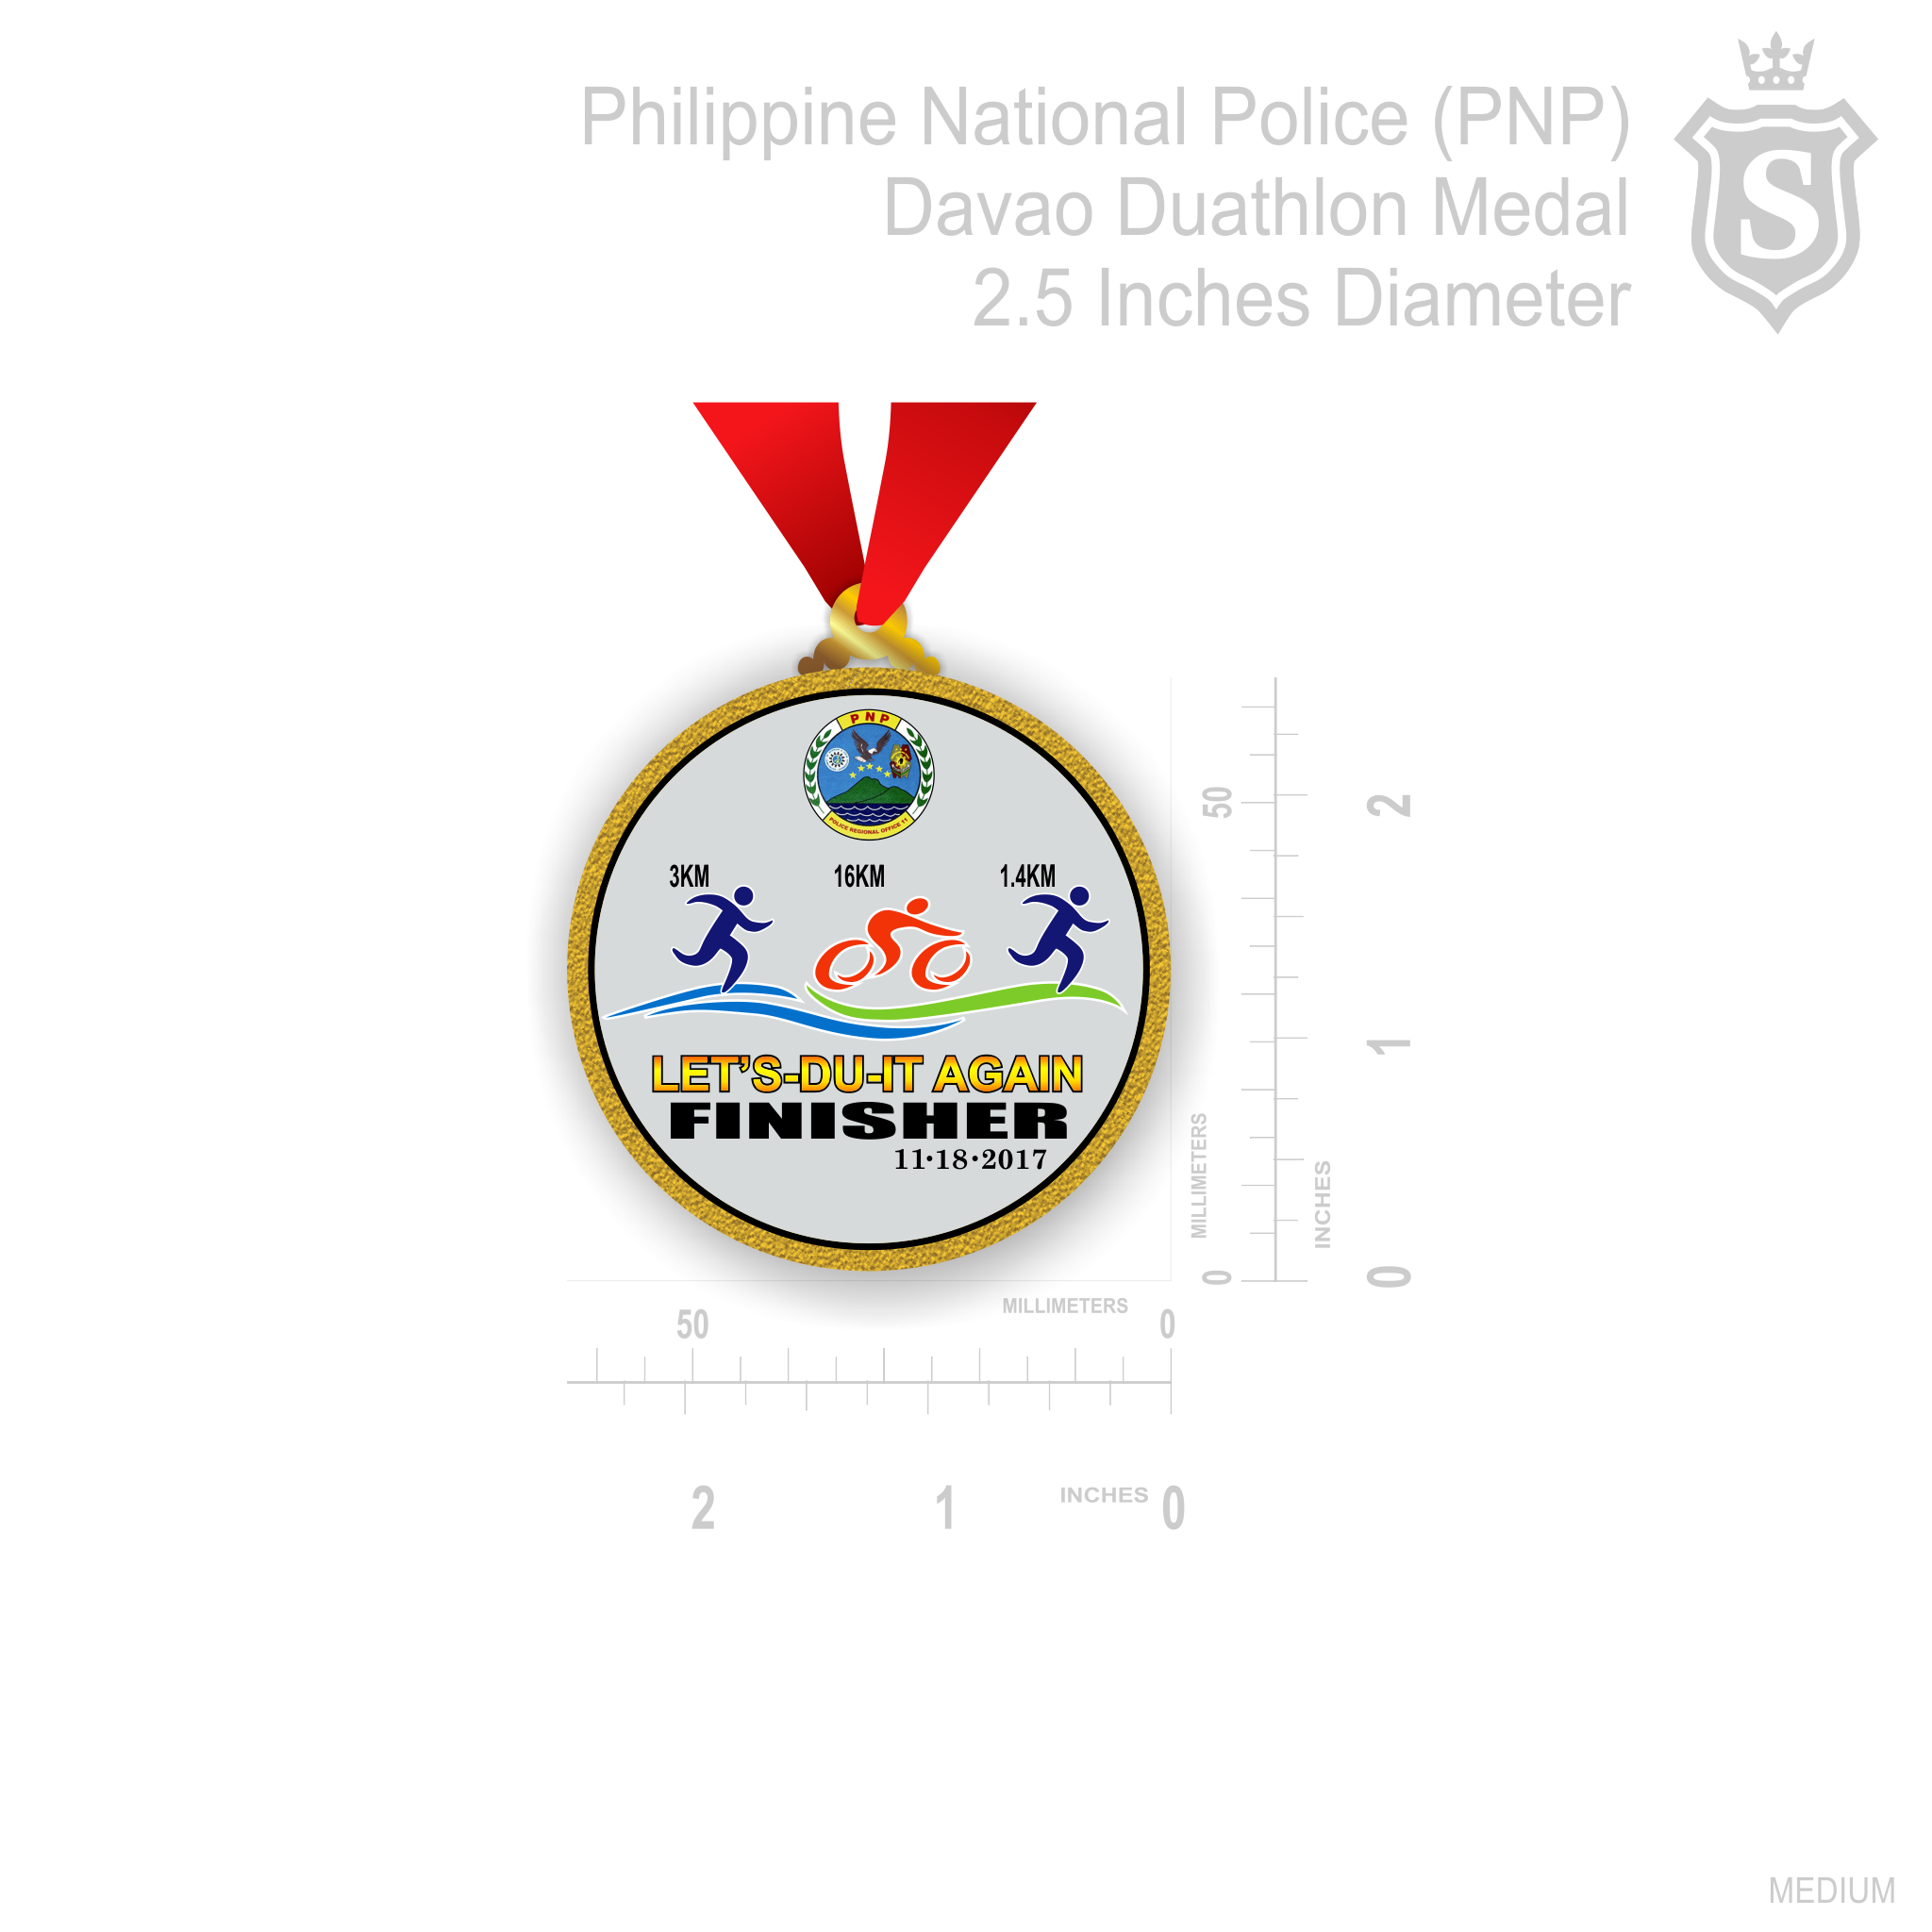 Philippie National Police (PNP) Duathlon Medal - PNP